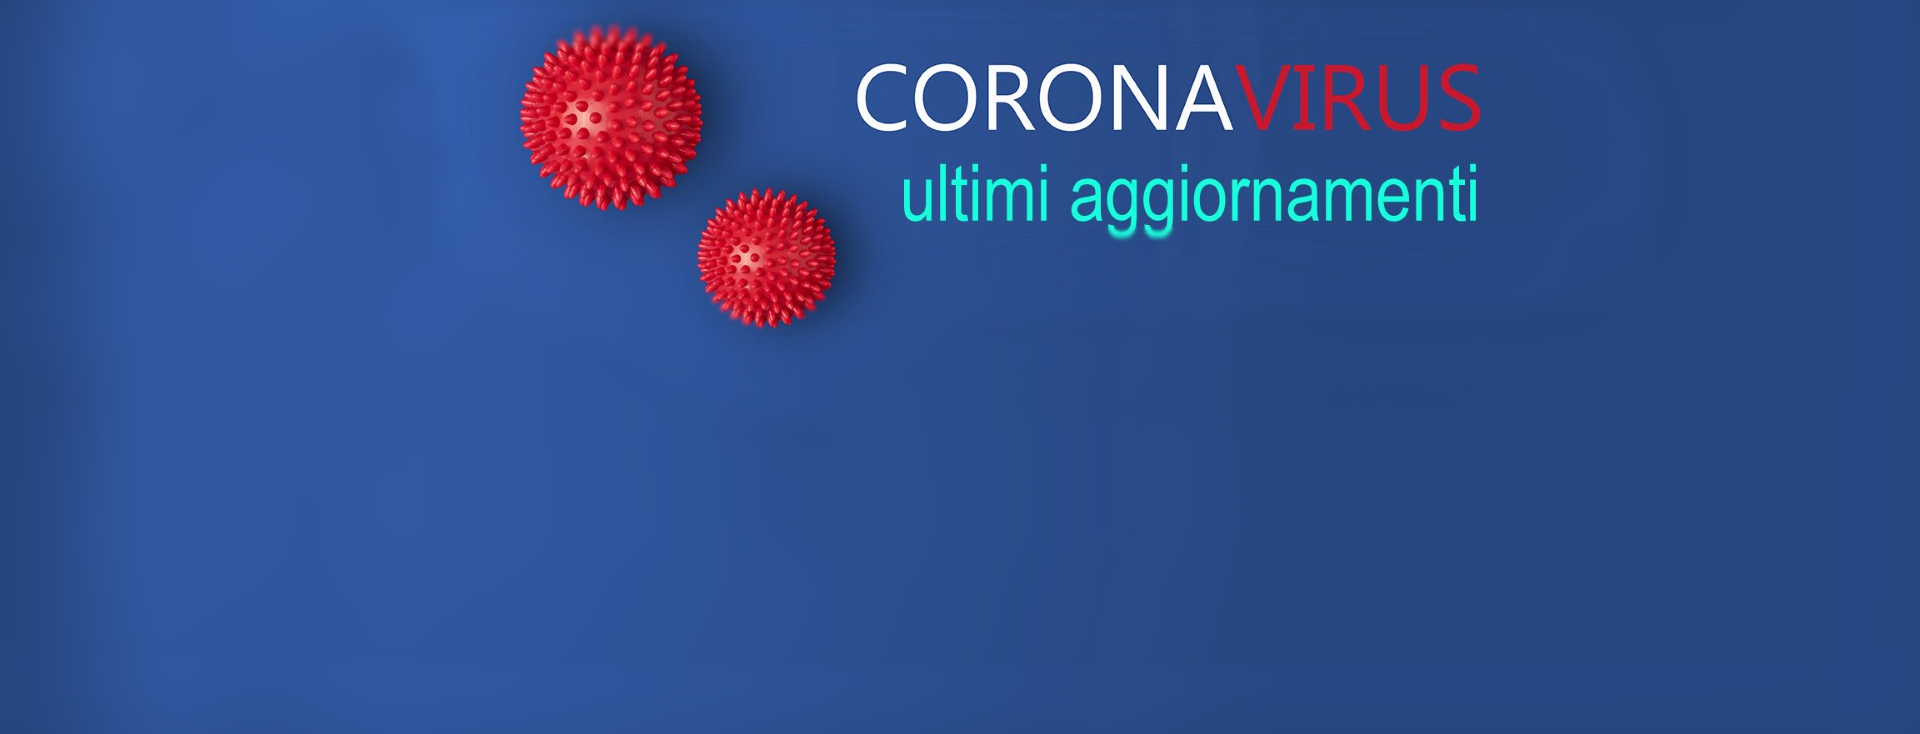 Revisione policy interna emergenza Coronavirus